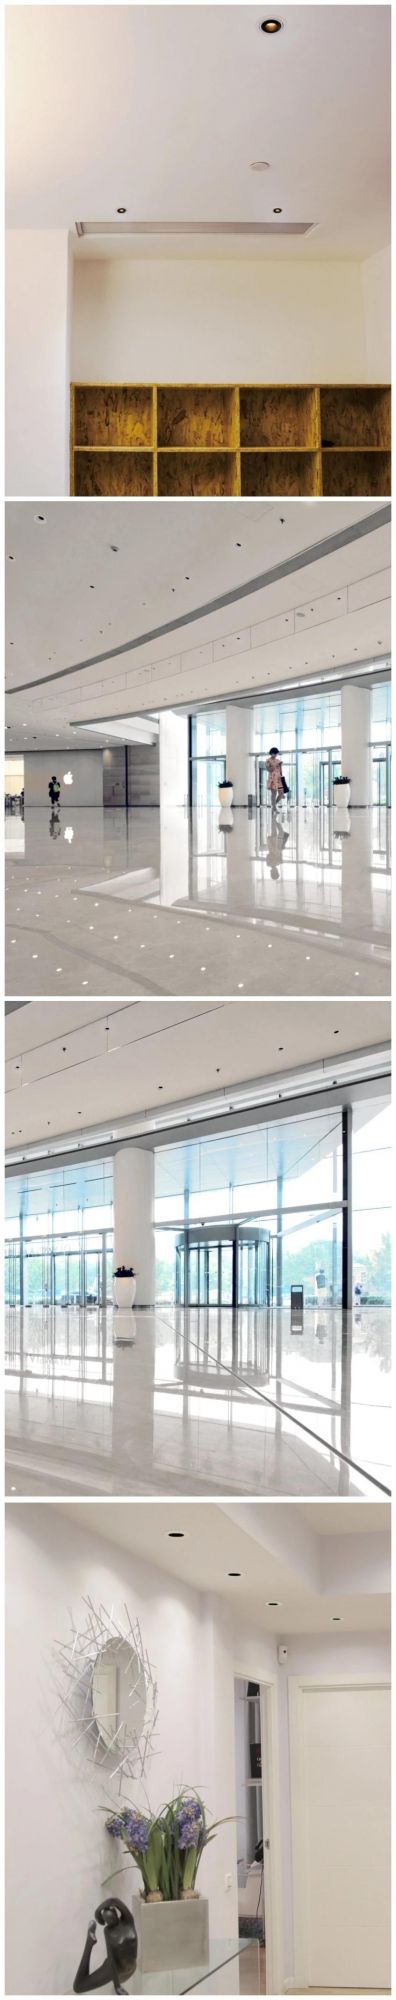 R6904 6W / 10W Aluminum Commercial Indoor Cobled Light Spot Light